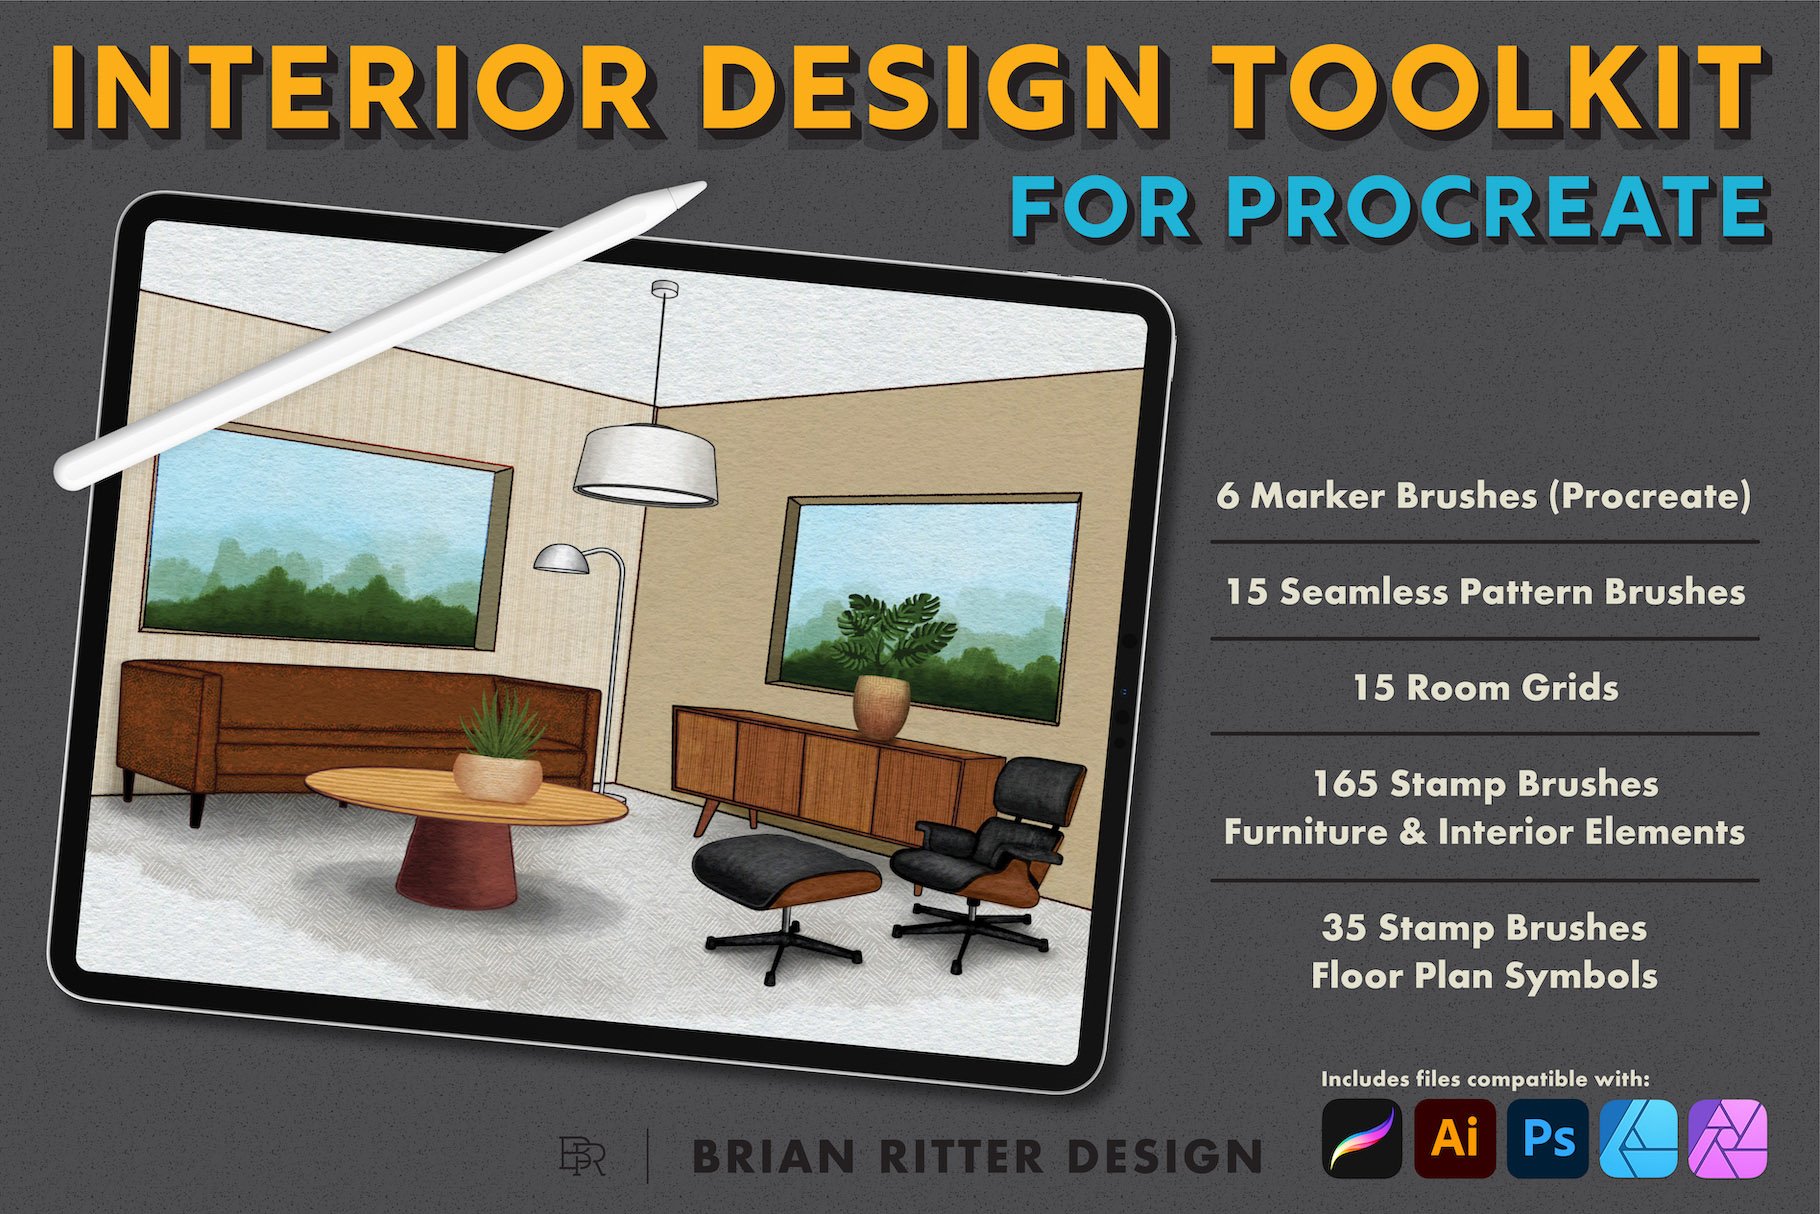 Interior Design Toolkit Procreatecover image.